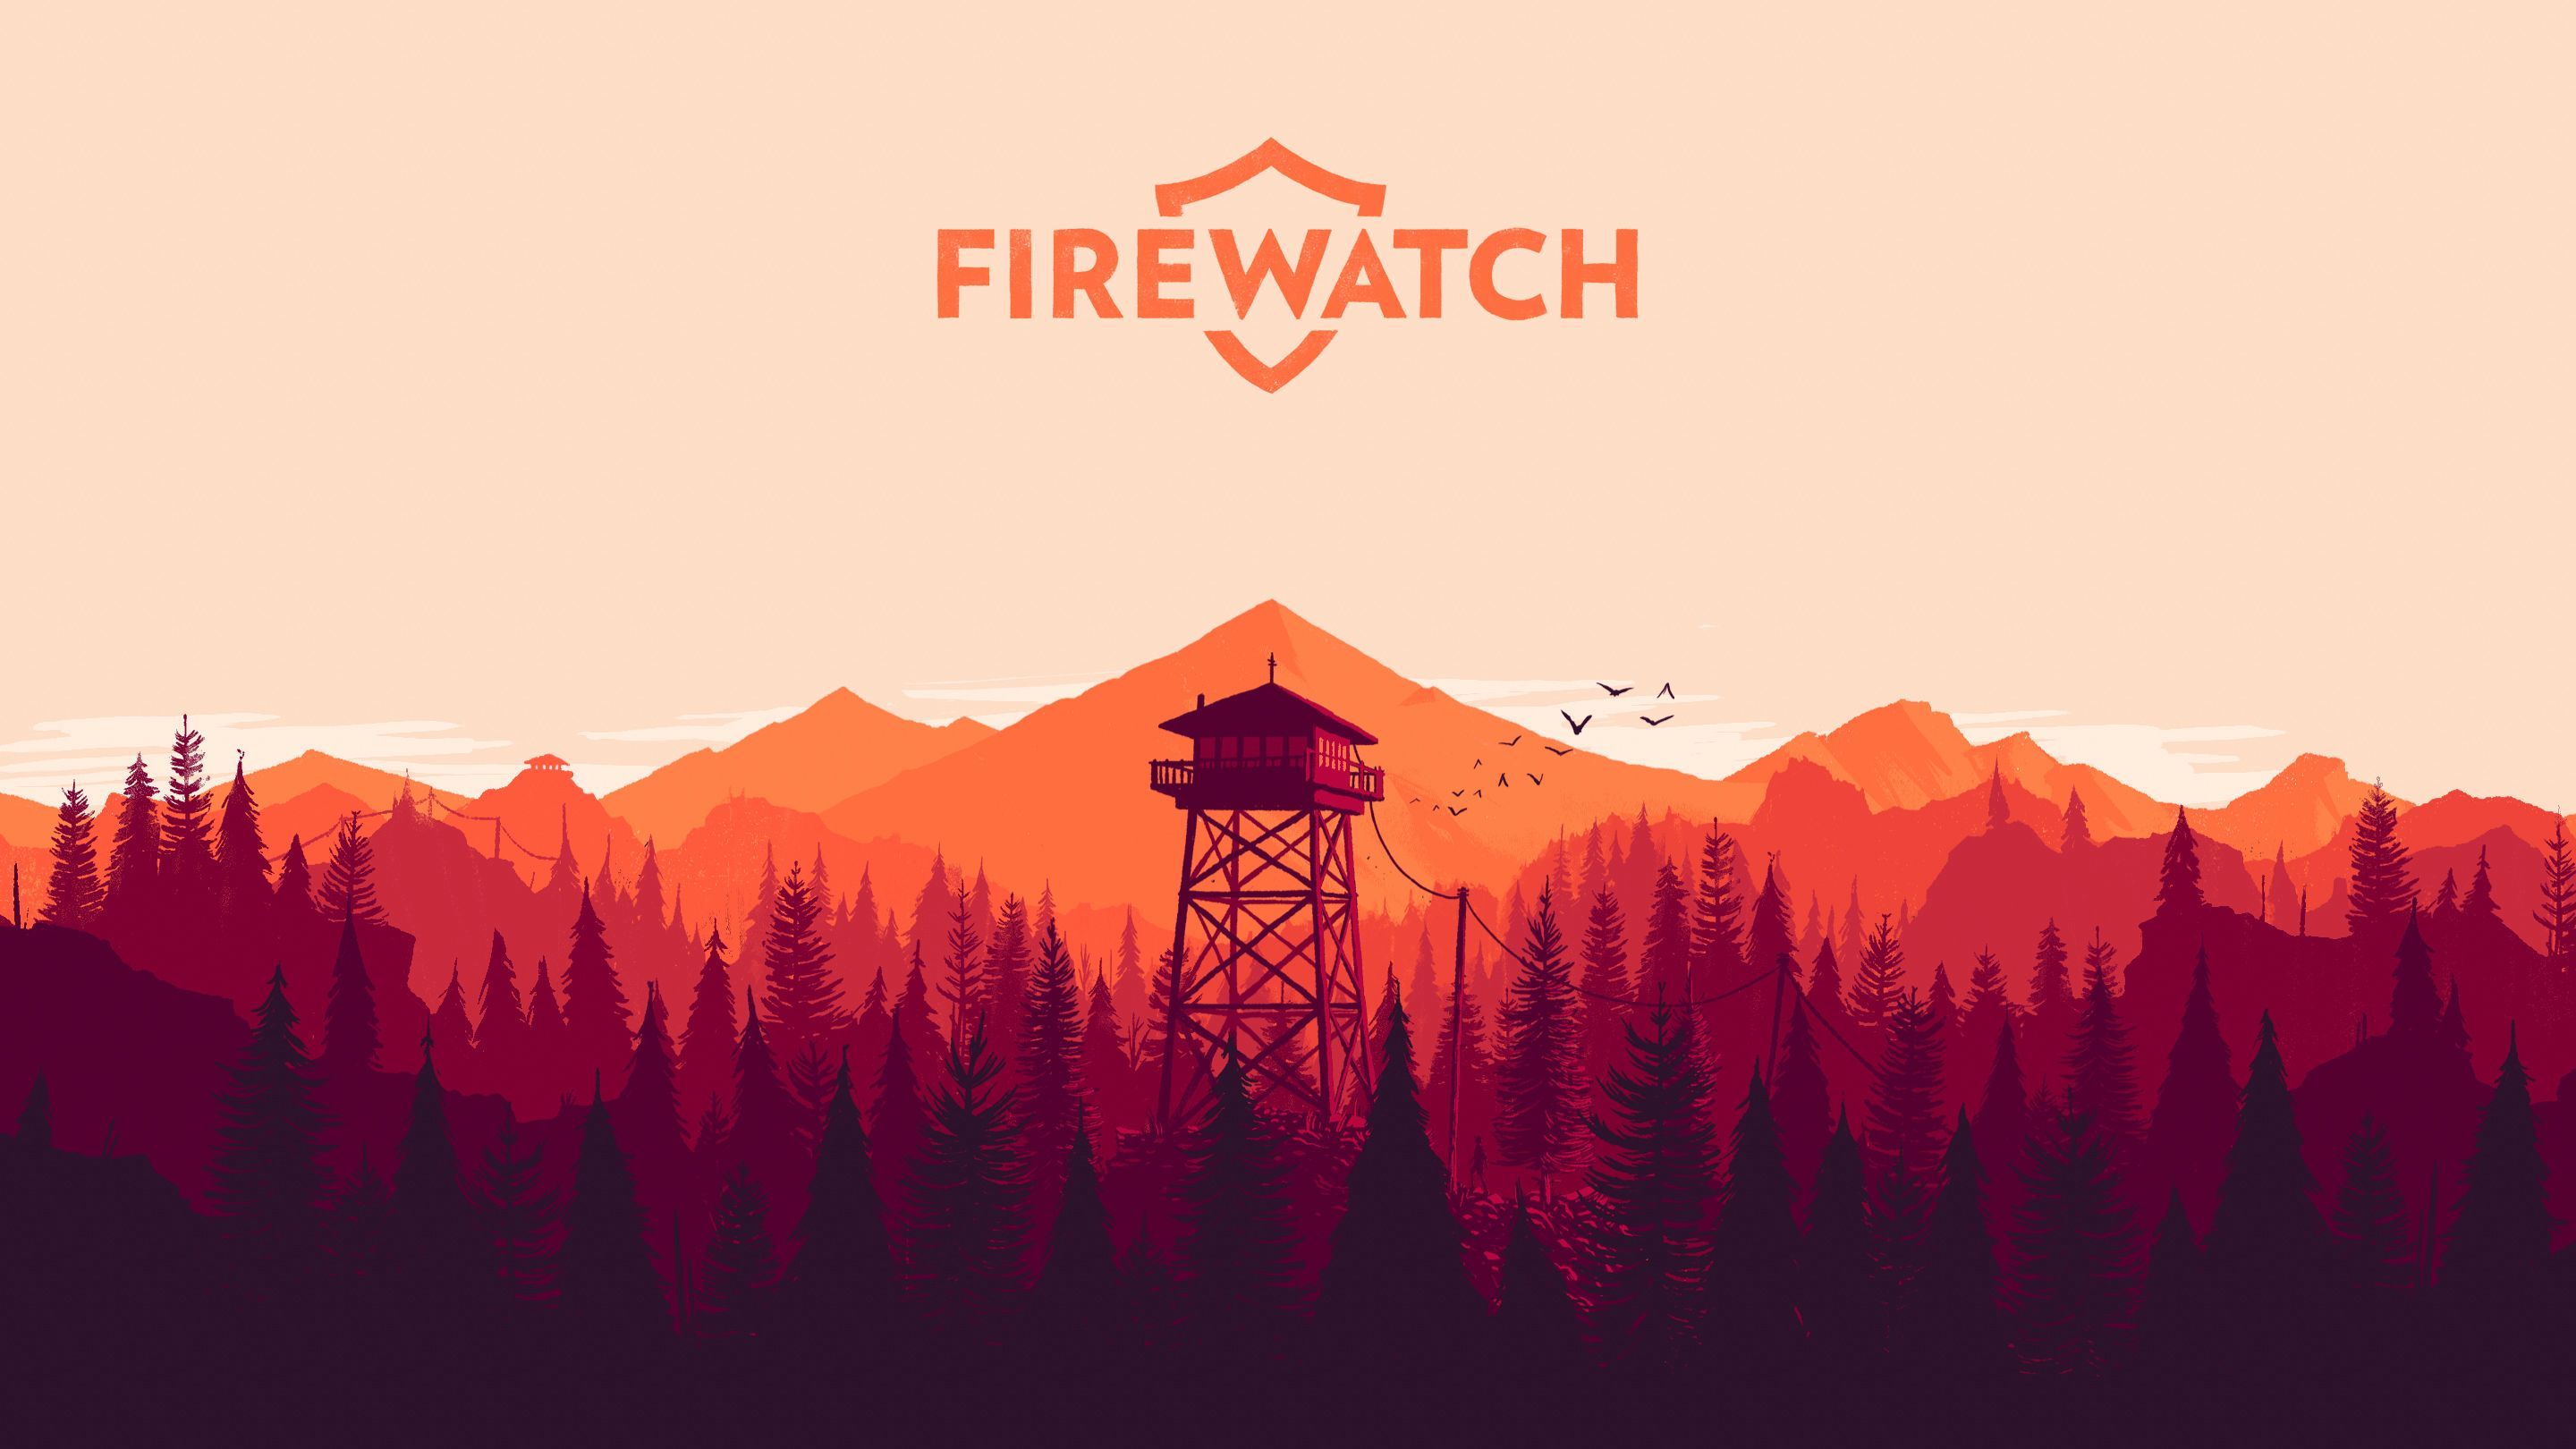 100+] Firewatch Wallpapers | Wallpapers.com